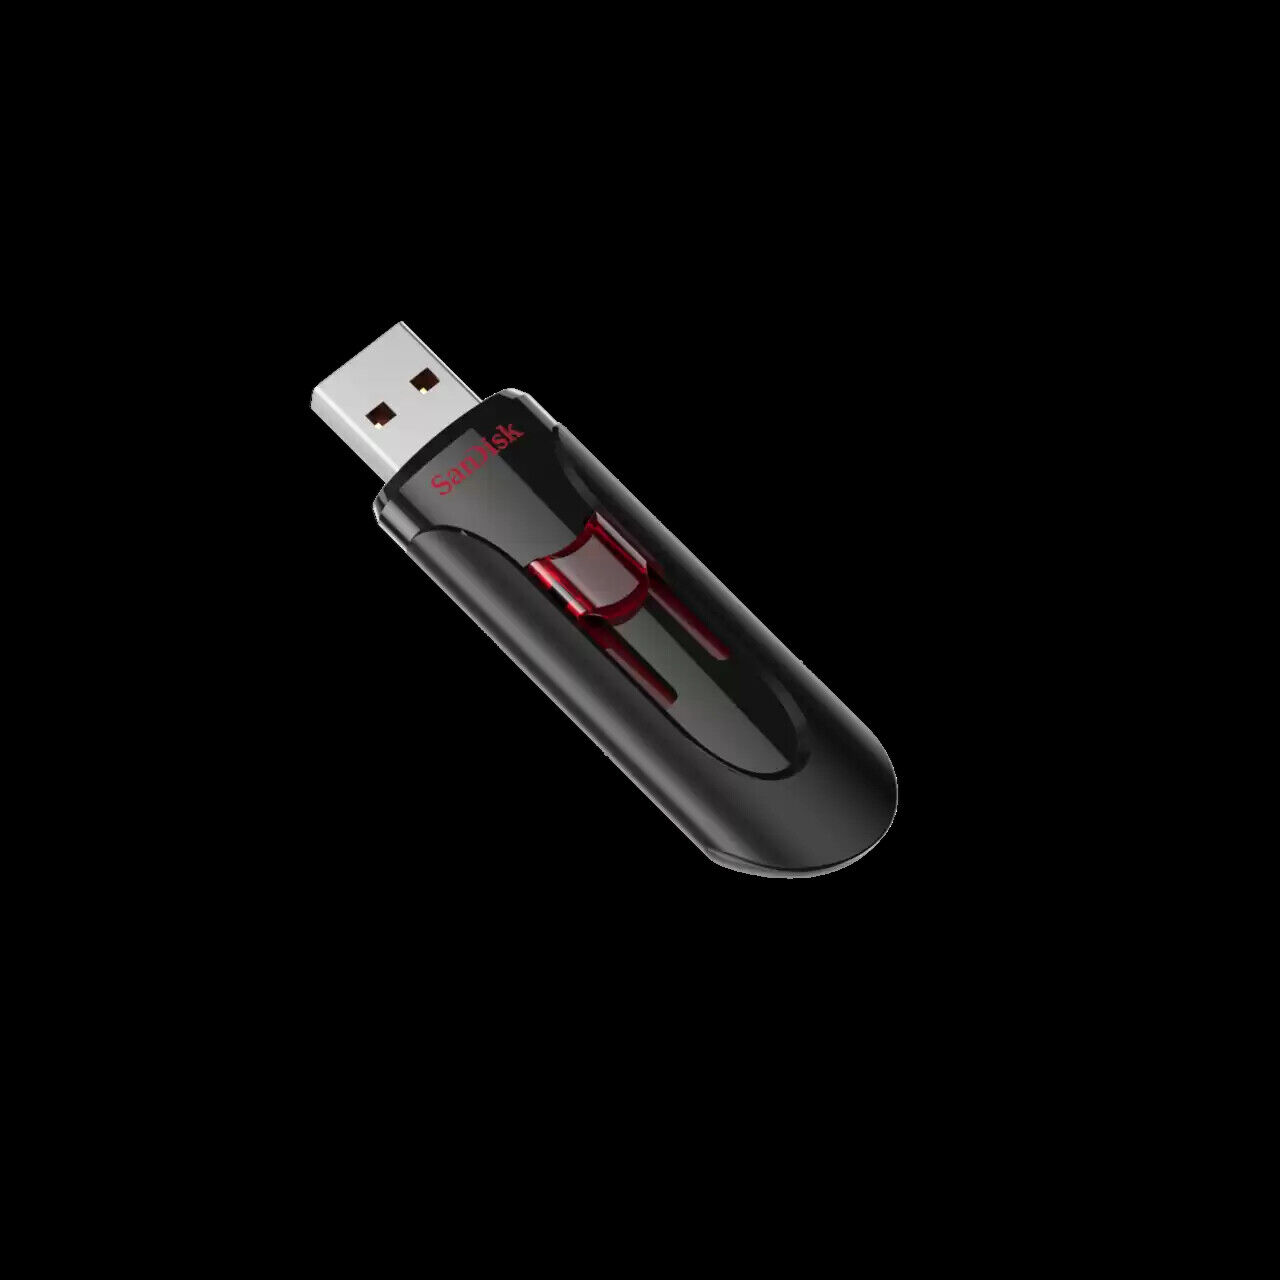 SanDisk 32GB Cruzer Glide USB 3.0 Flash Drive, Black - SDCZ600-032G-G35